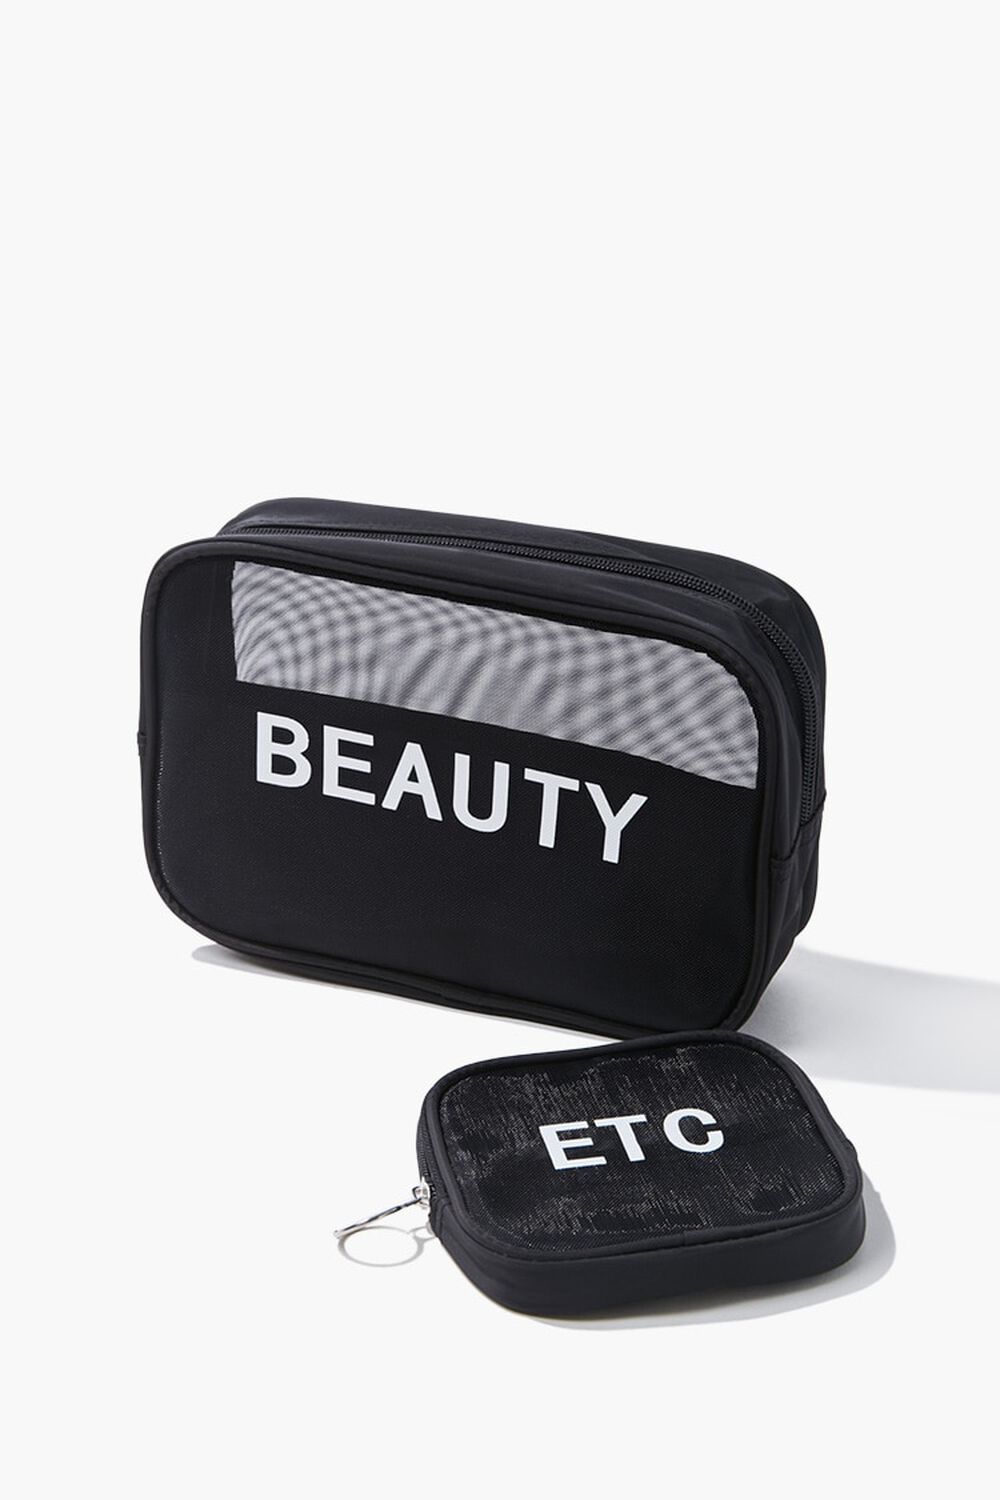 BLACK Beauty Graphic Makeup Bag, image 1